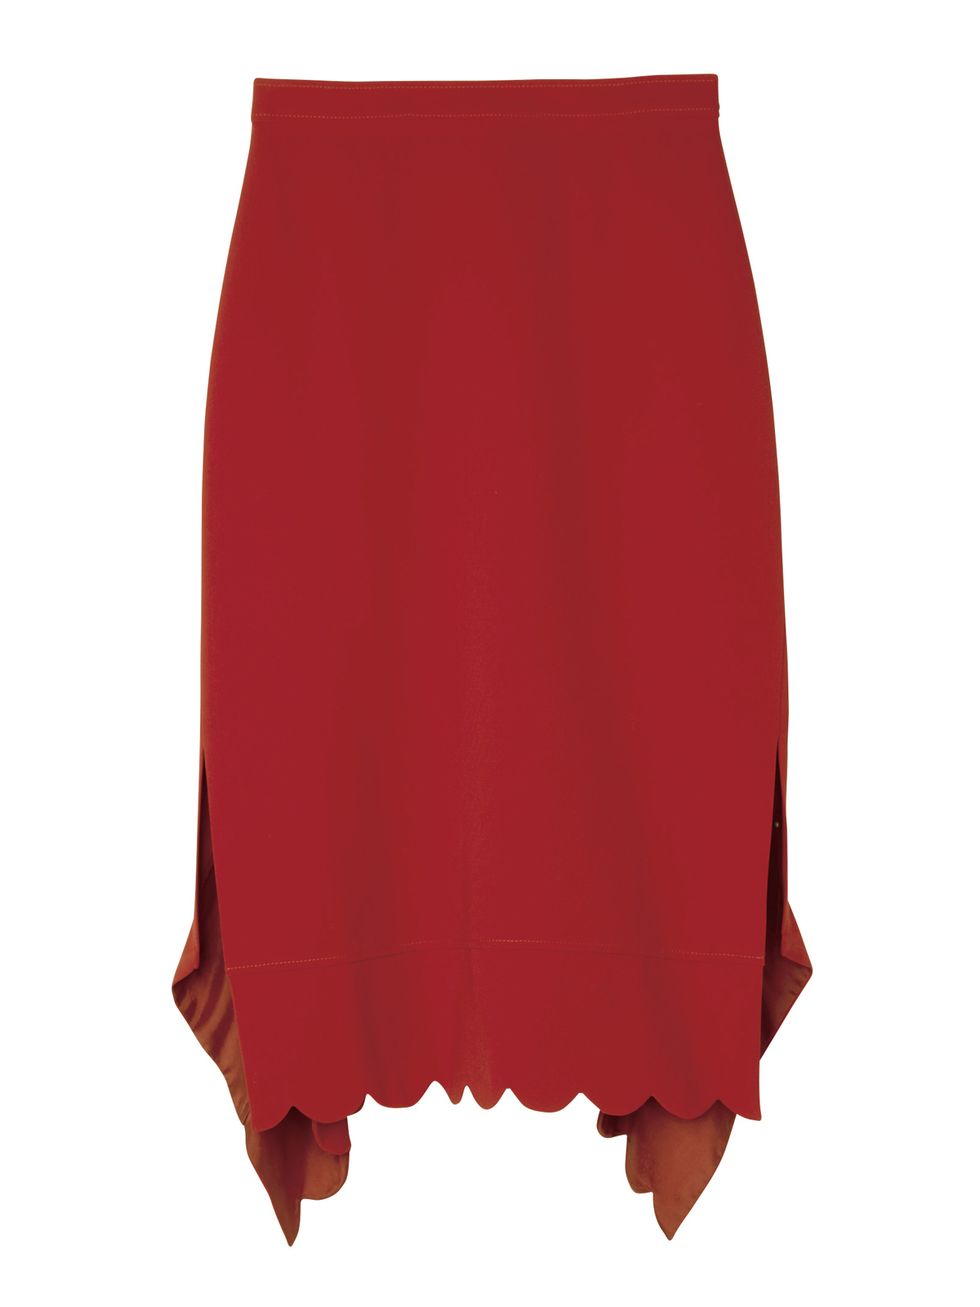 Clothing, Pencil skirt, Red, Fashion, Waist, A-line, 